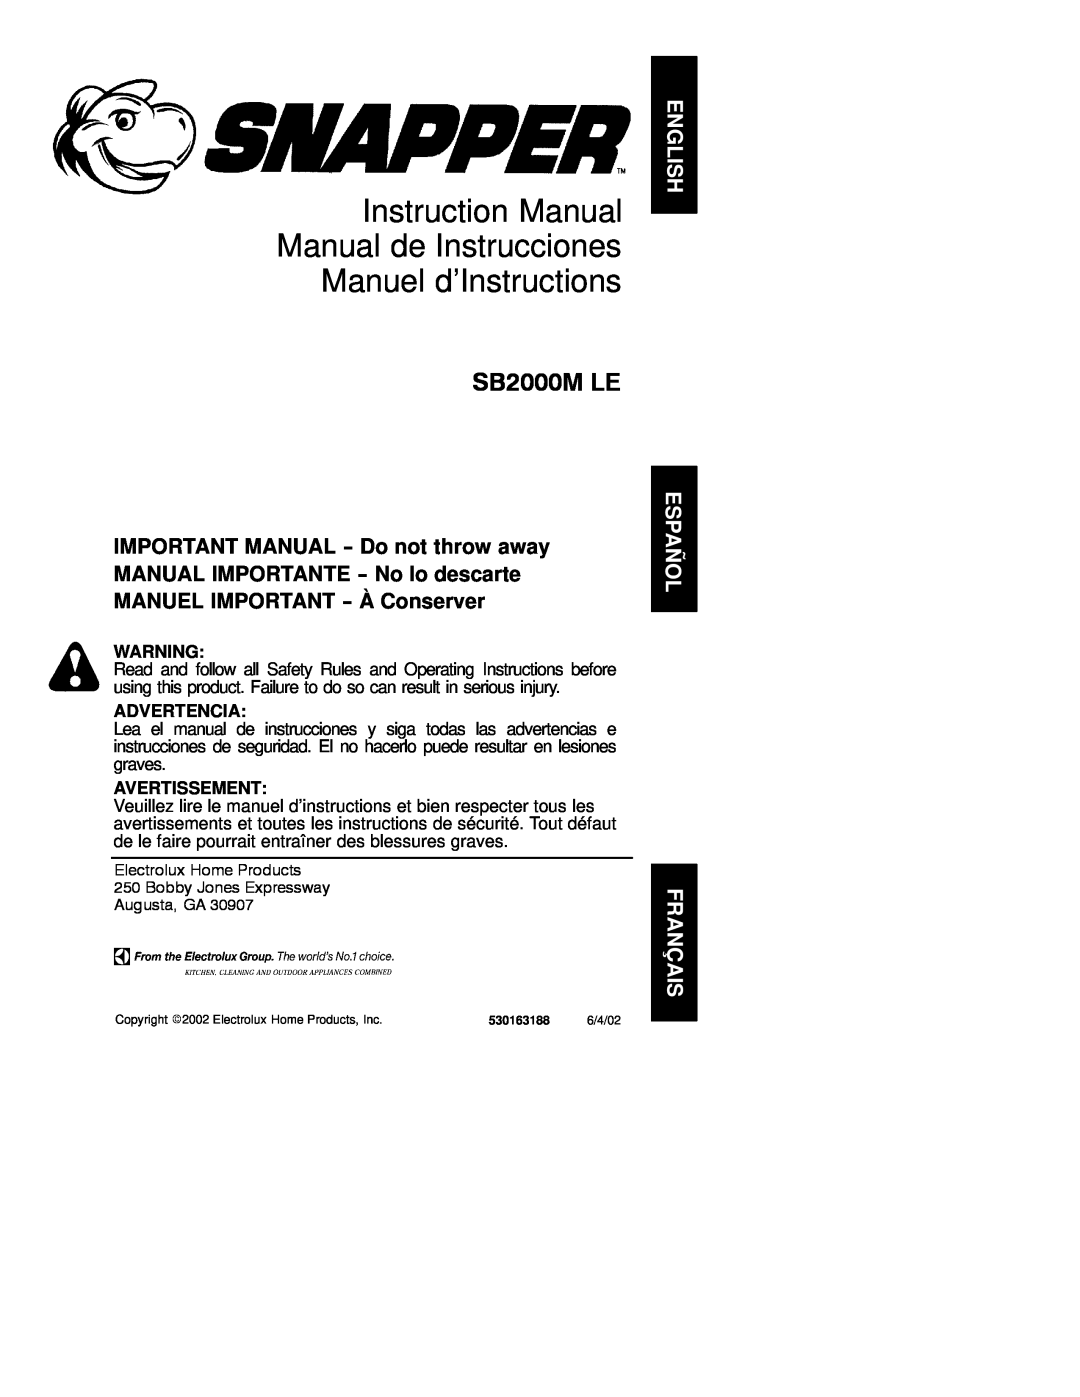 Electrolux SB2000M LE instruction manual Advertencia, Avertissement 